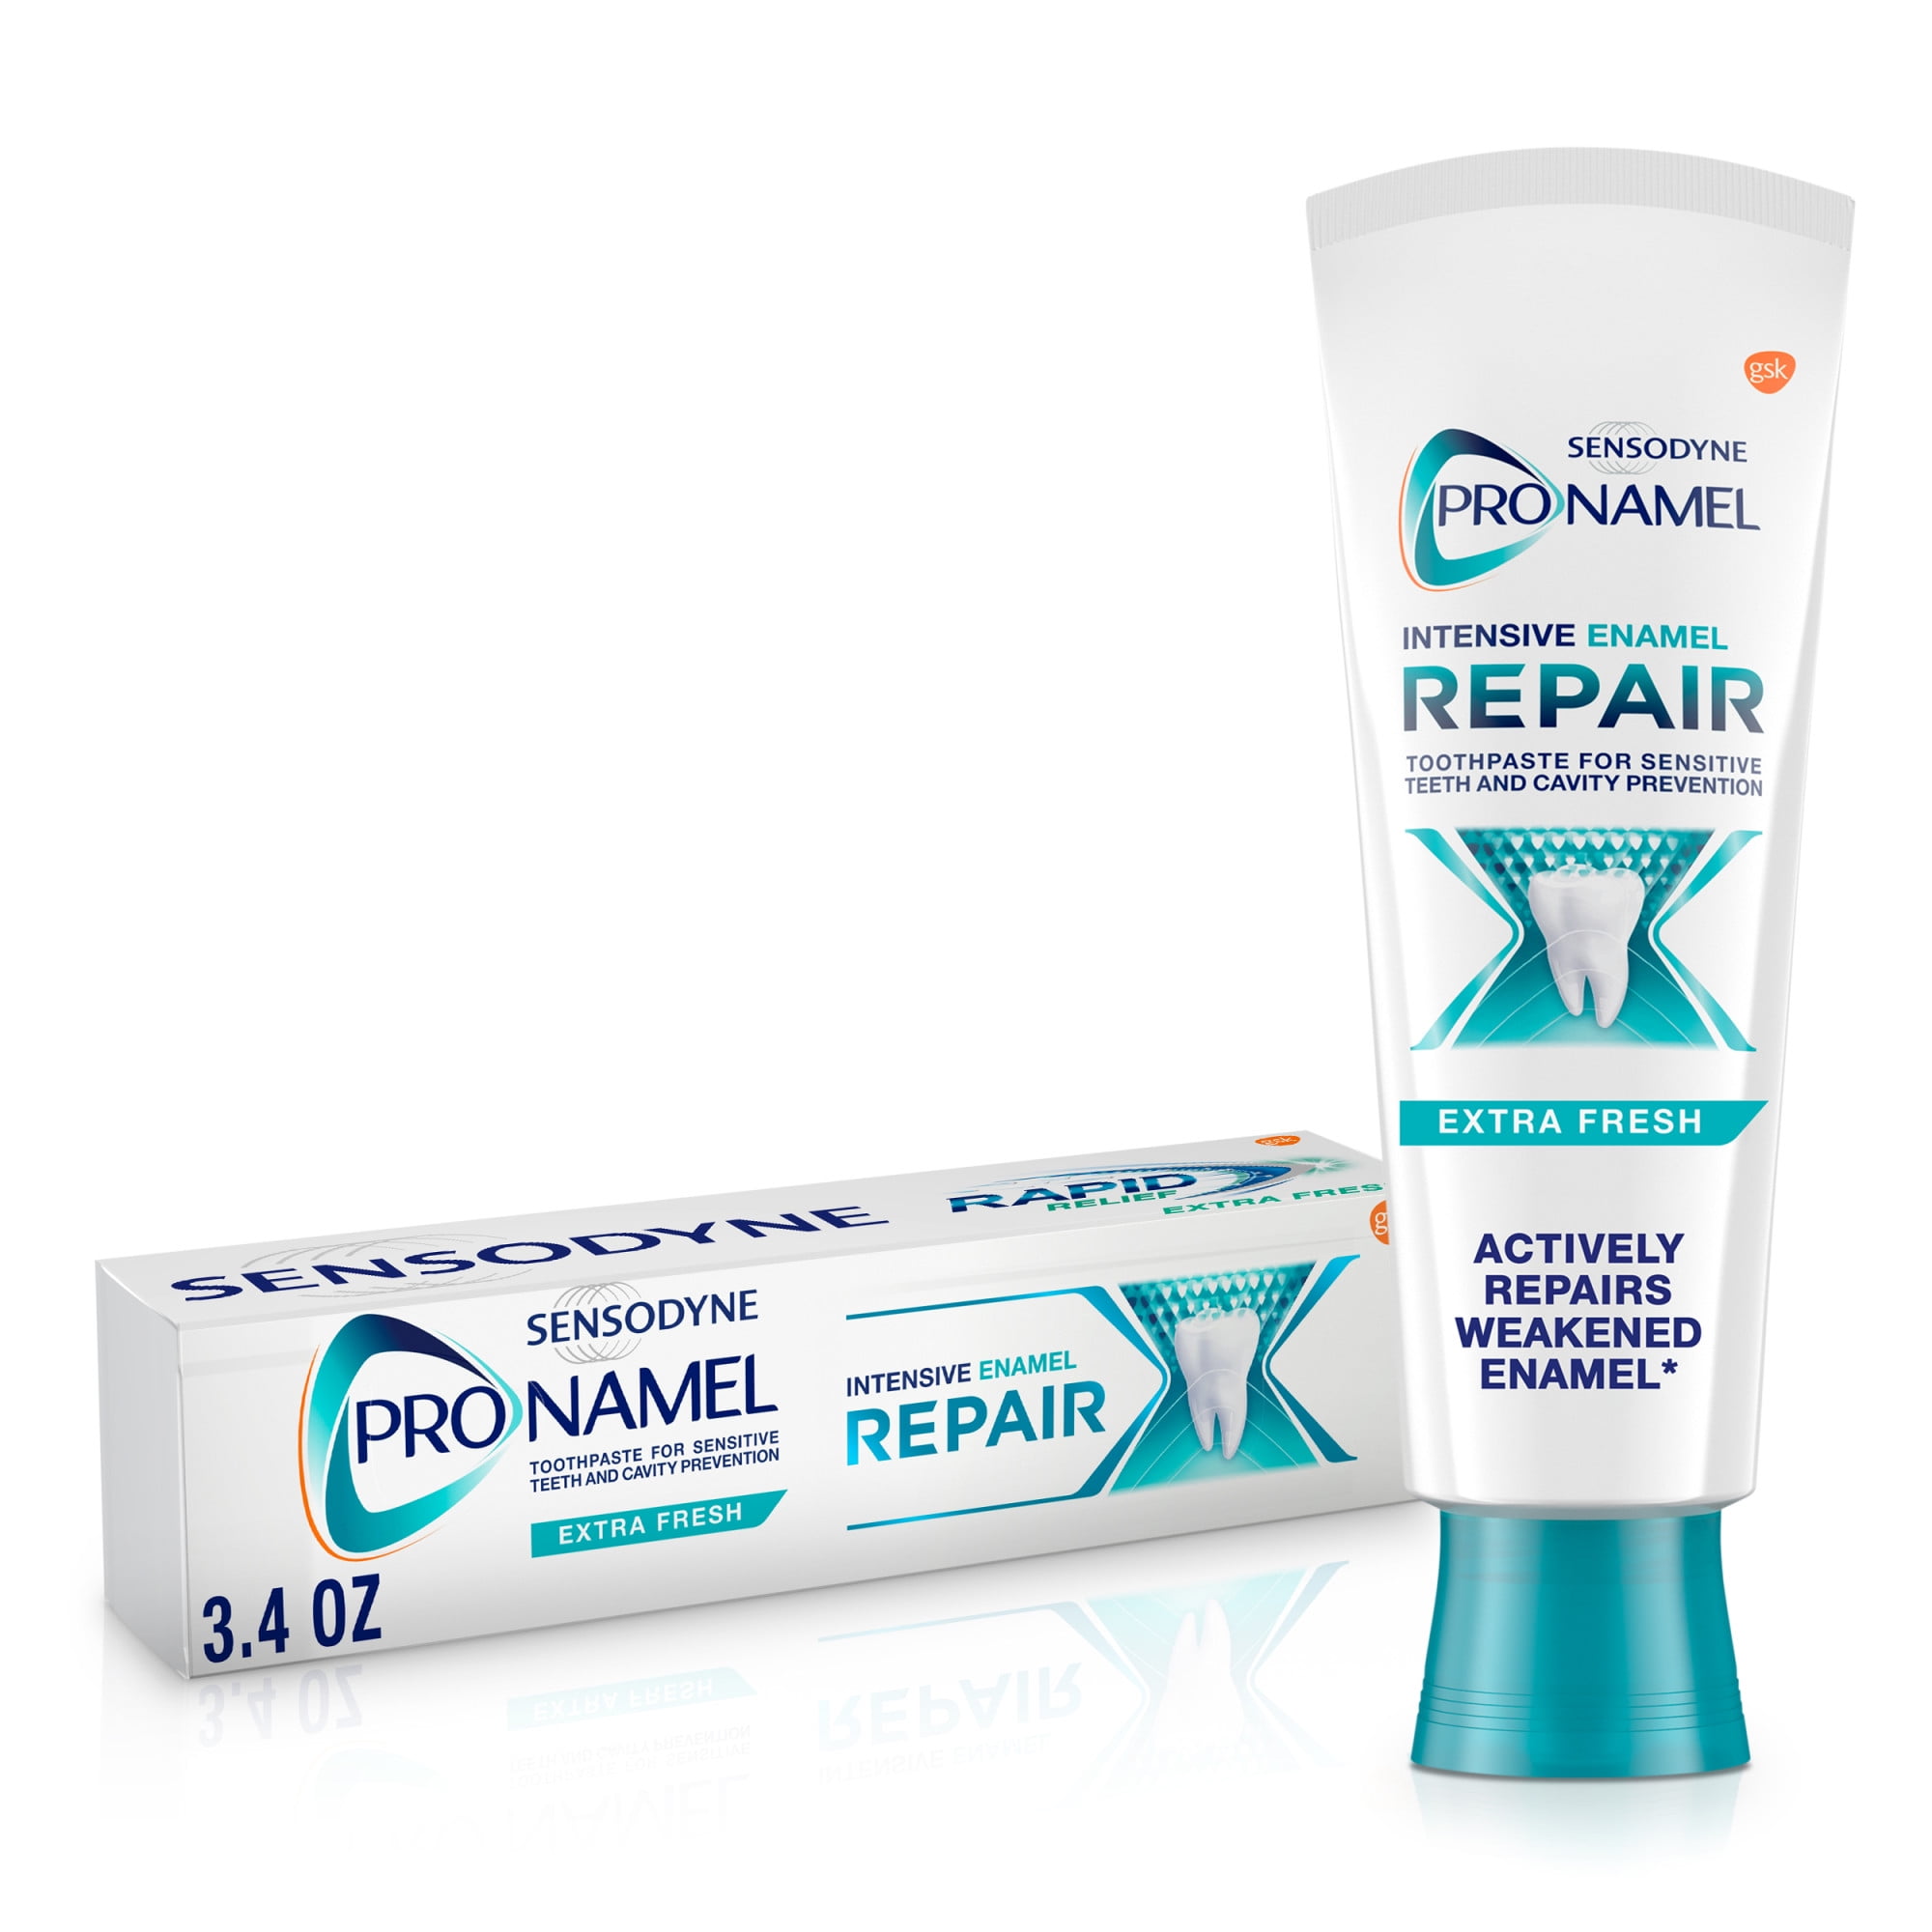 Sensodyne Pronamel Intensive Enamel Repair Sensitive Toothpaste, Extra Fresh 3.4 Oz